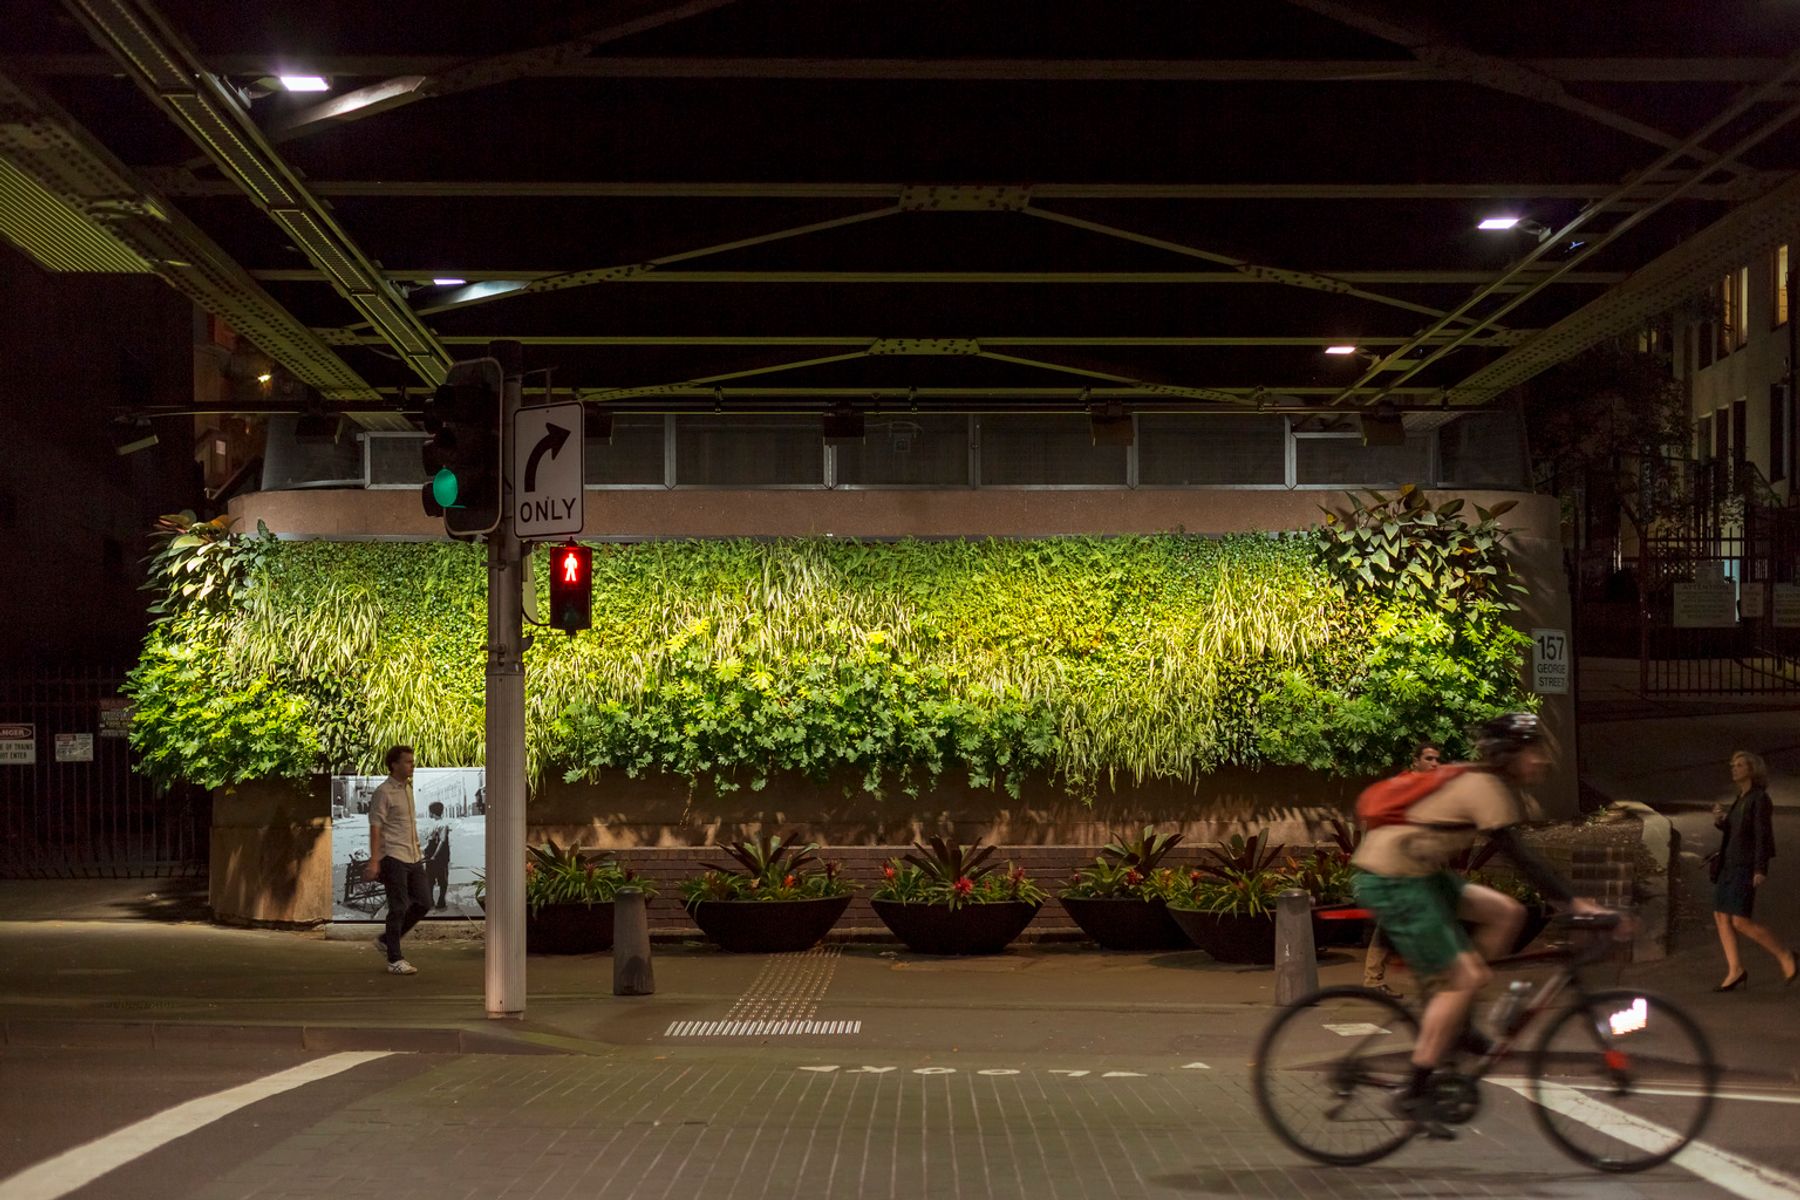 Green Wall 140 George Street, Sydney. Progettazione illuminotecnica: Electrolight, Sydney. Fotografia: Jackie Chan, Sydney.